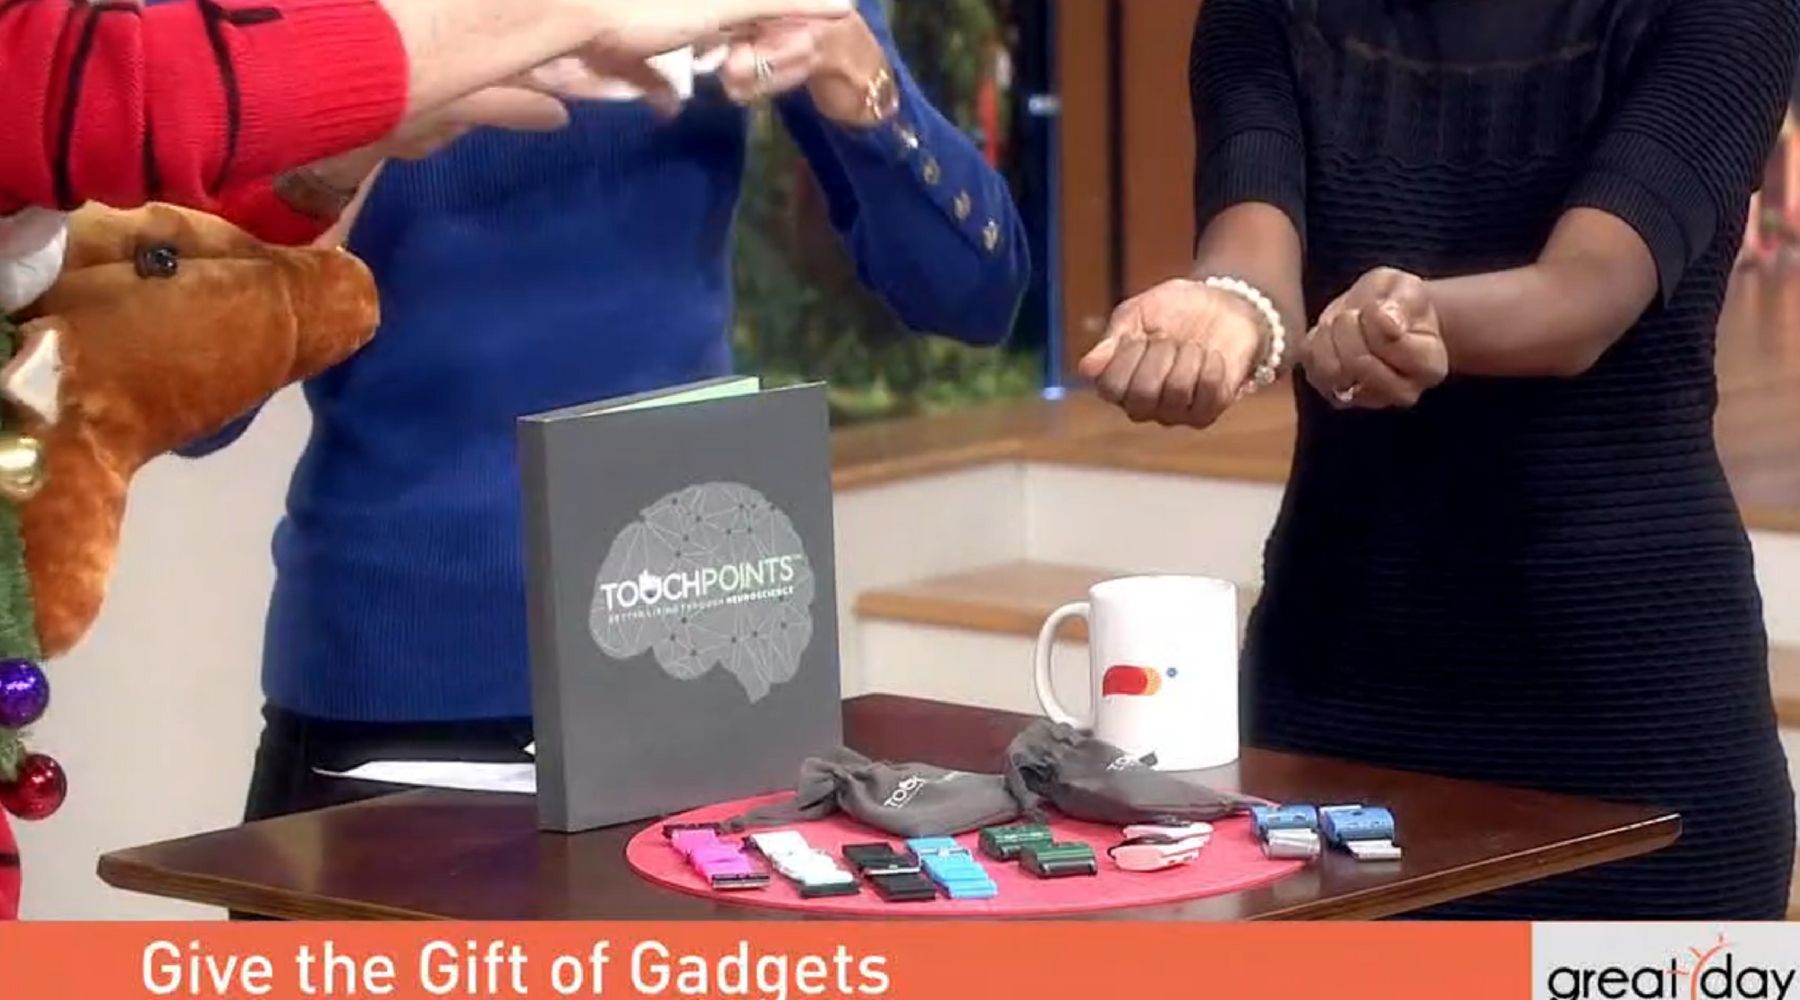 CBS Washington - The Gadget Gift Guide